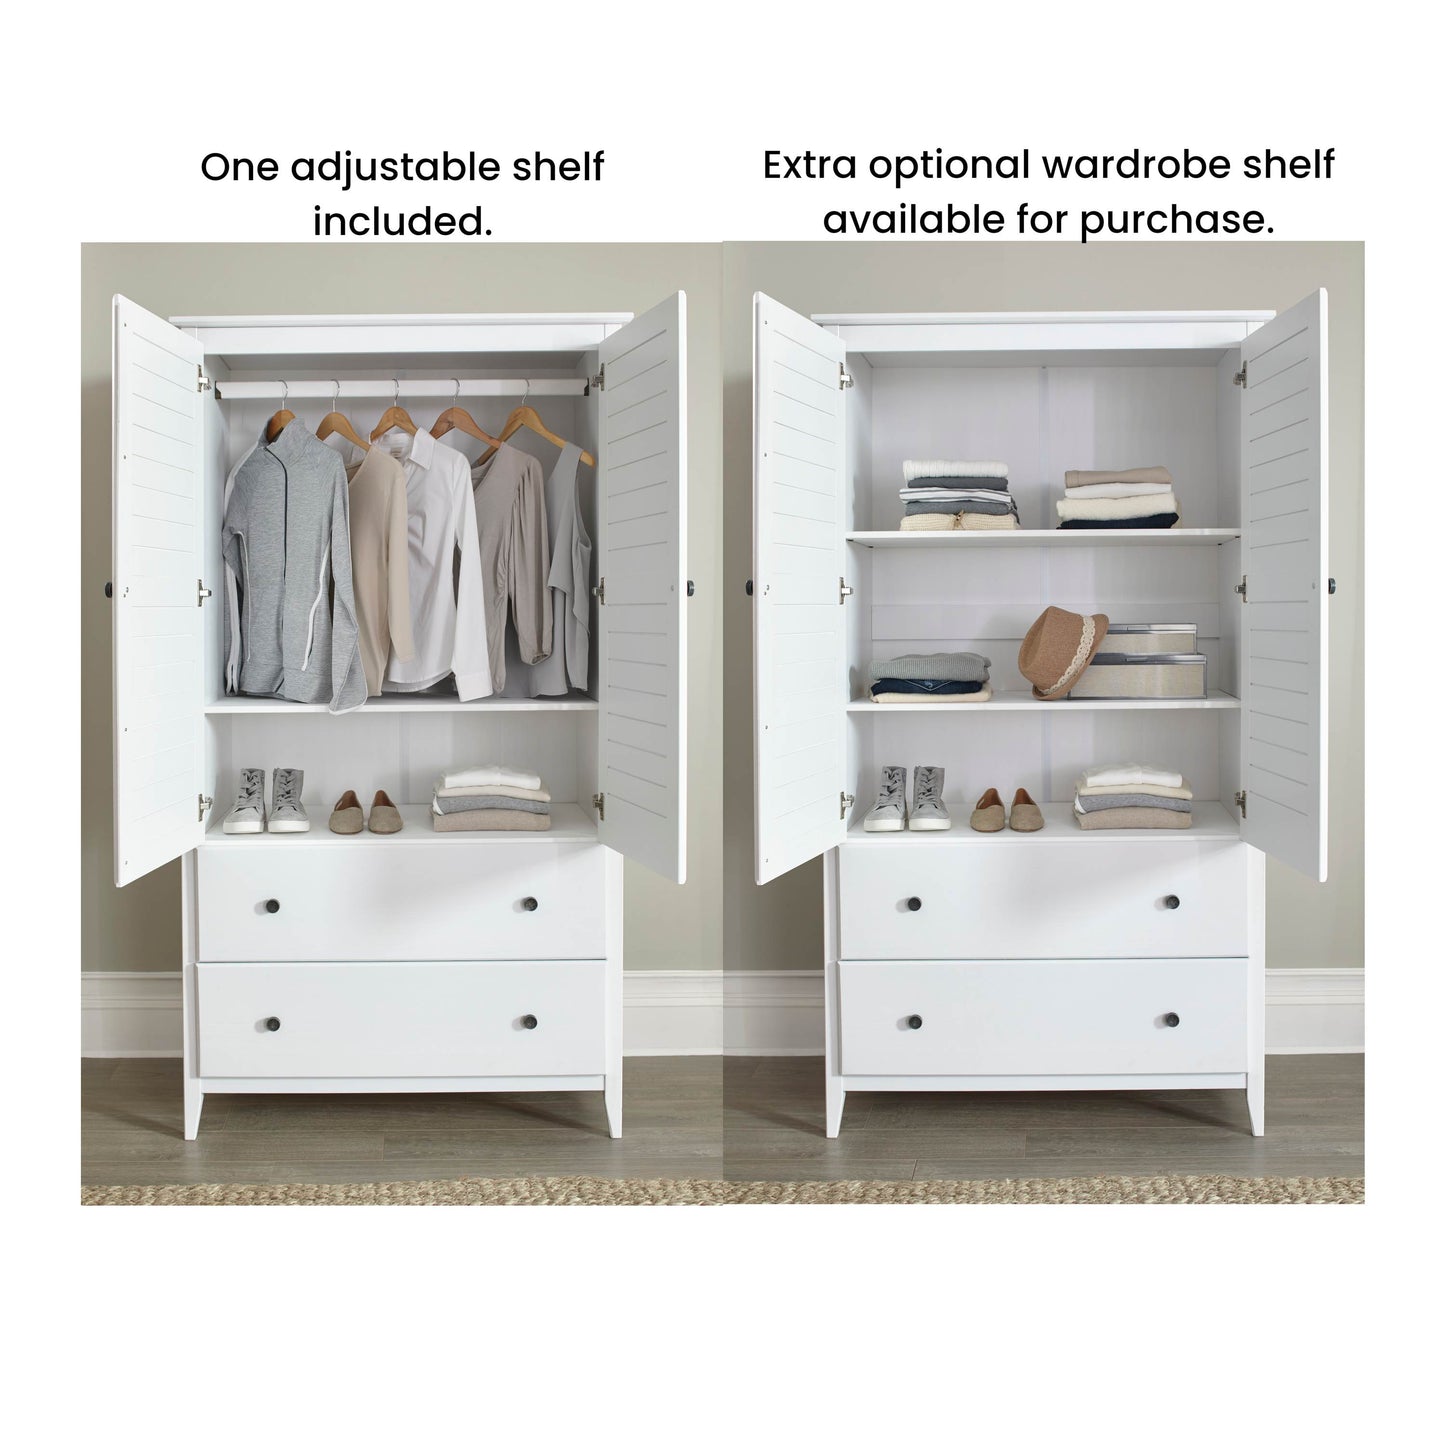 Greenport Optional Wardrobe Shelf